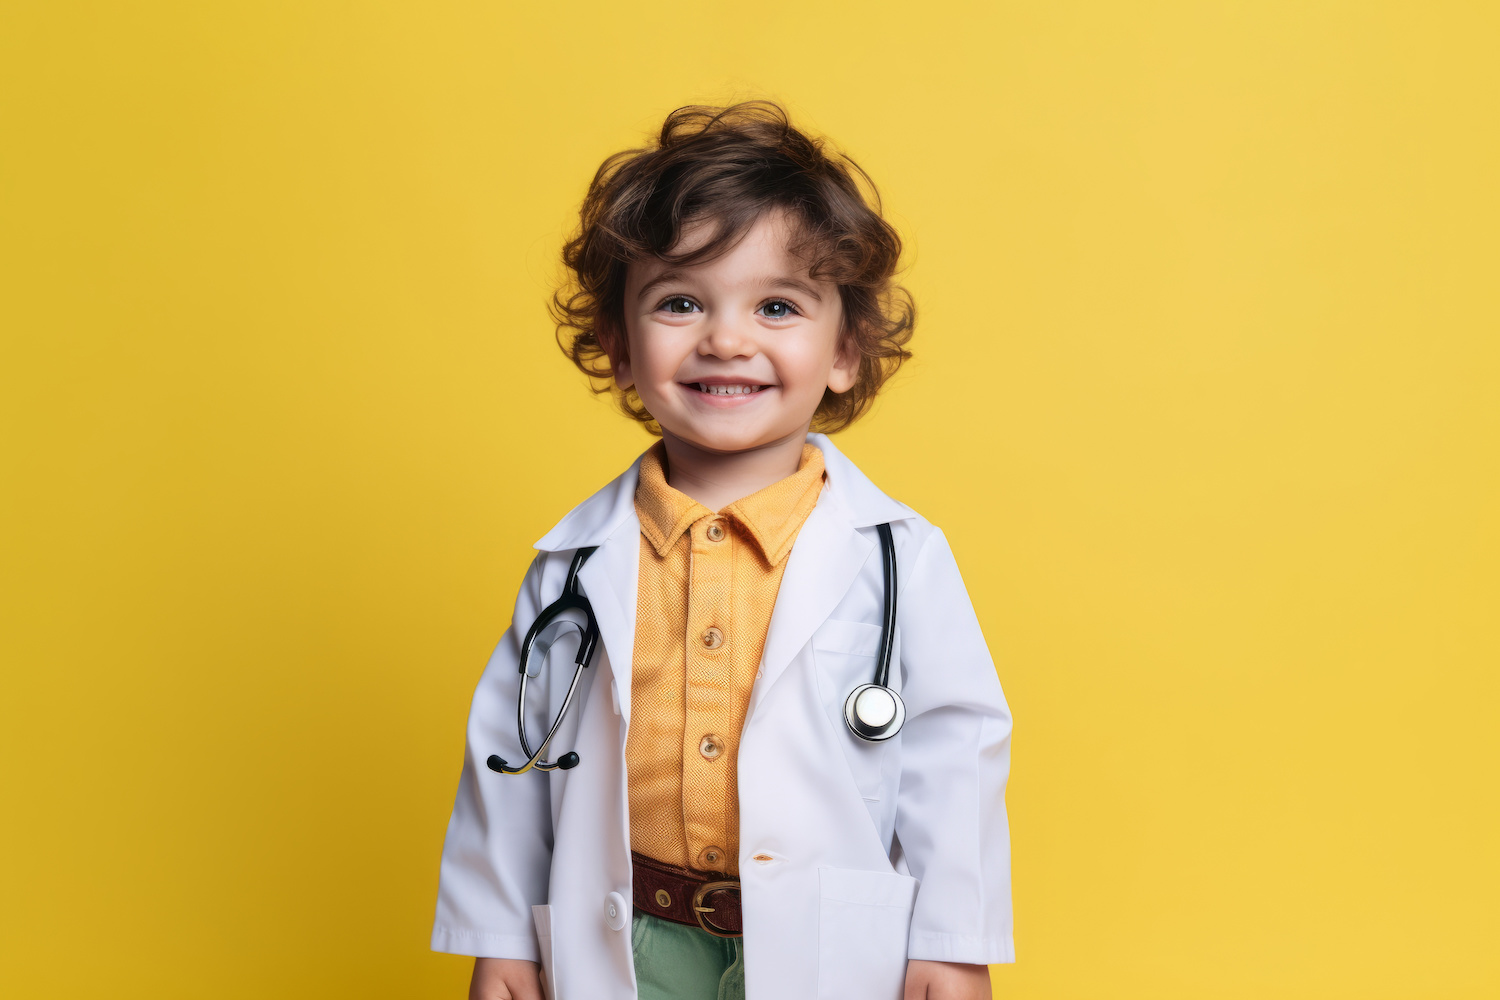 Pediatric Urgent Care vs. the Emergency Room: What’s the Difference? - Premier Pediatric Urgent Care Provider in Texas - Little Spurs Pediatric Urgent Care